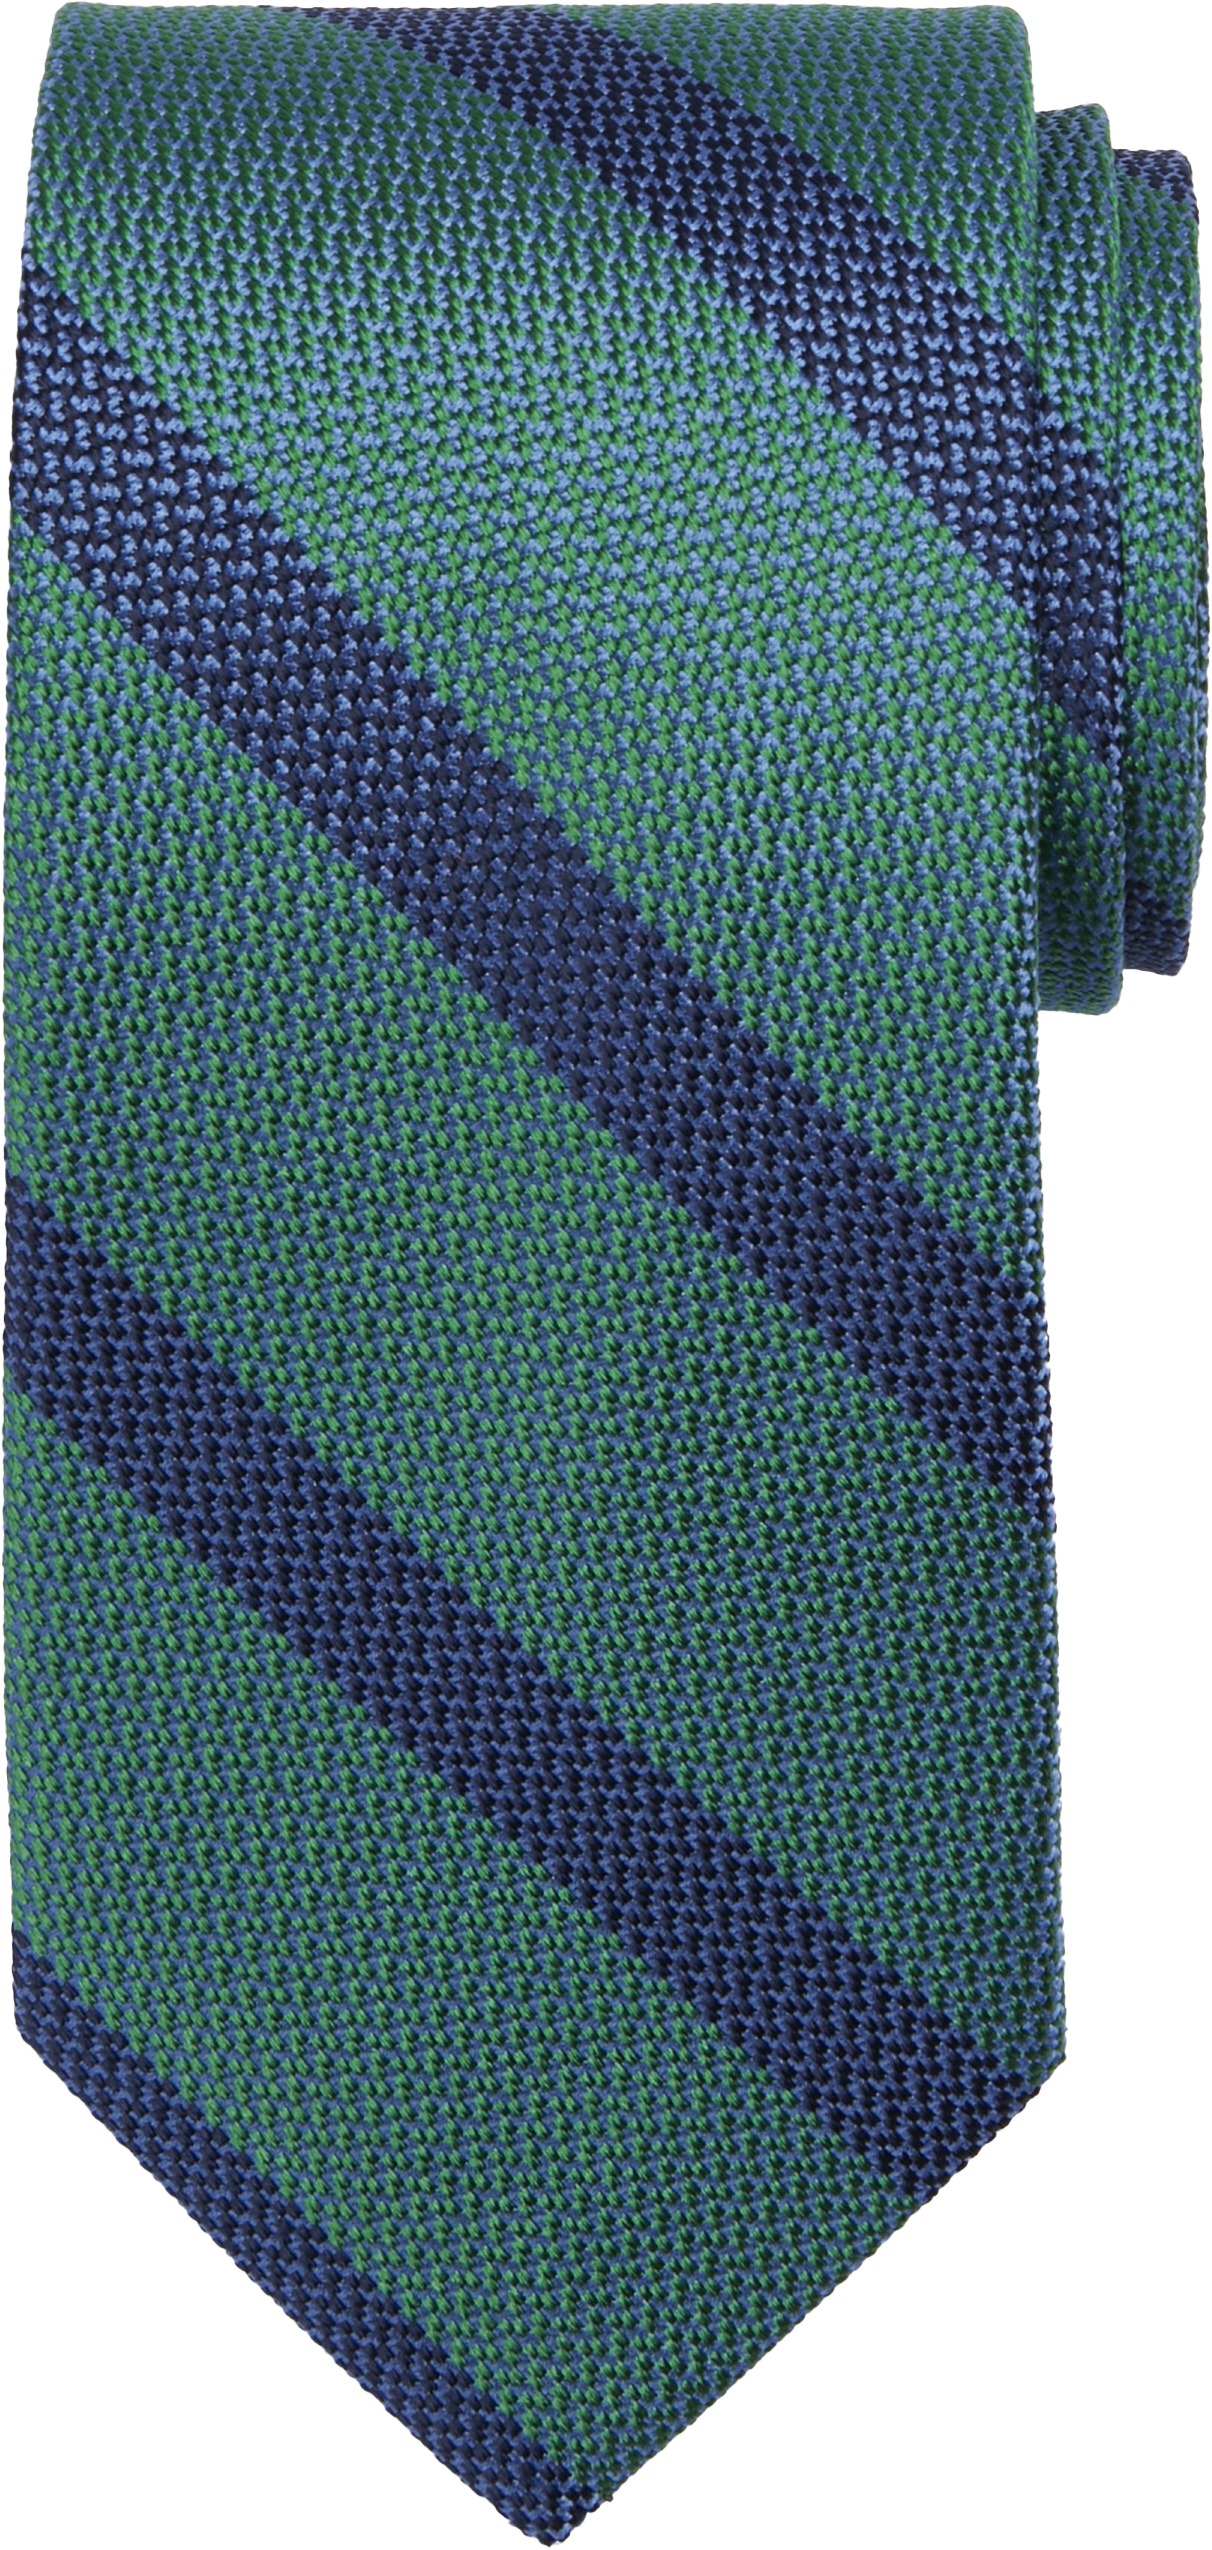 Narrow Woven Stripe Tie